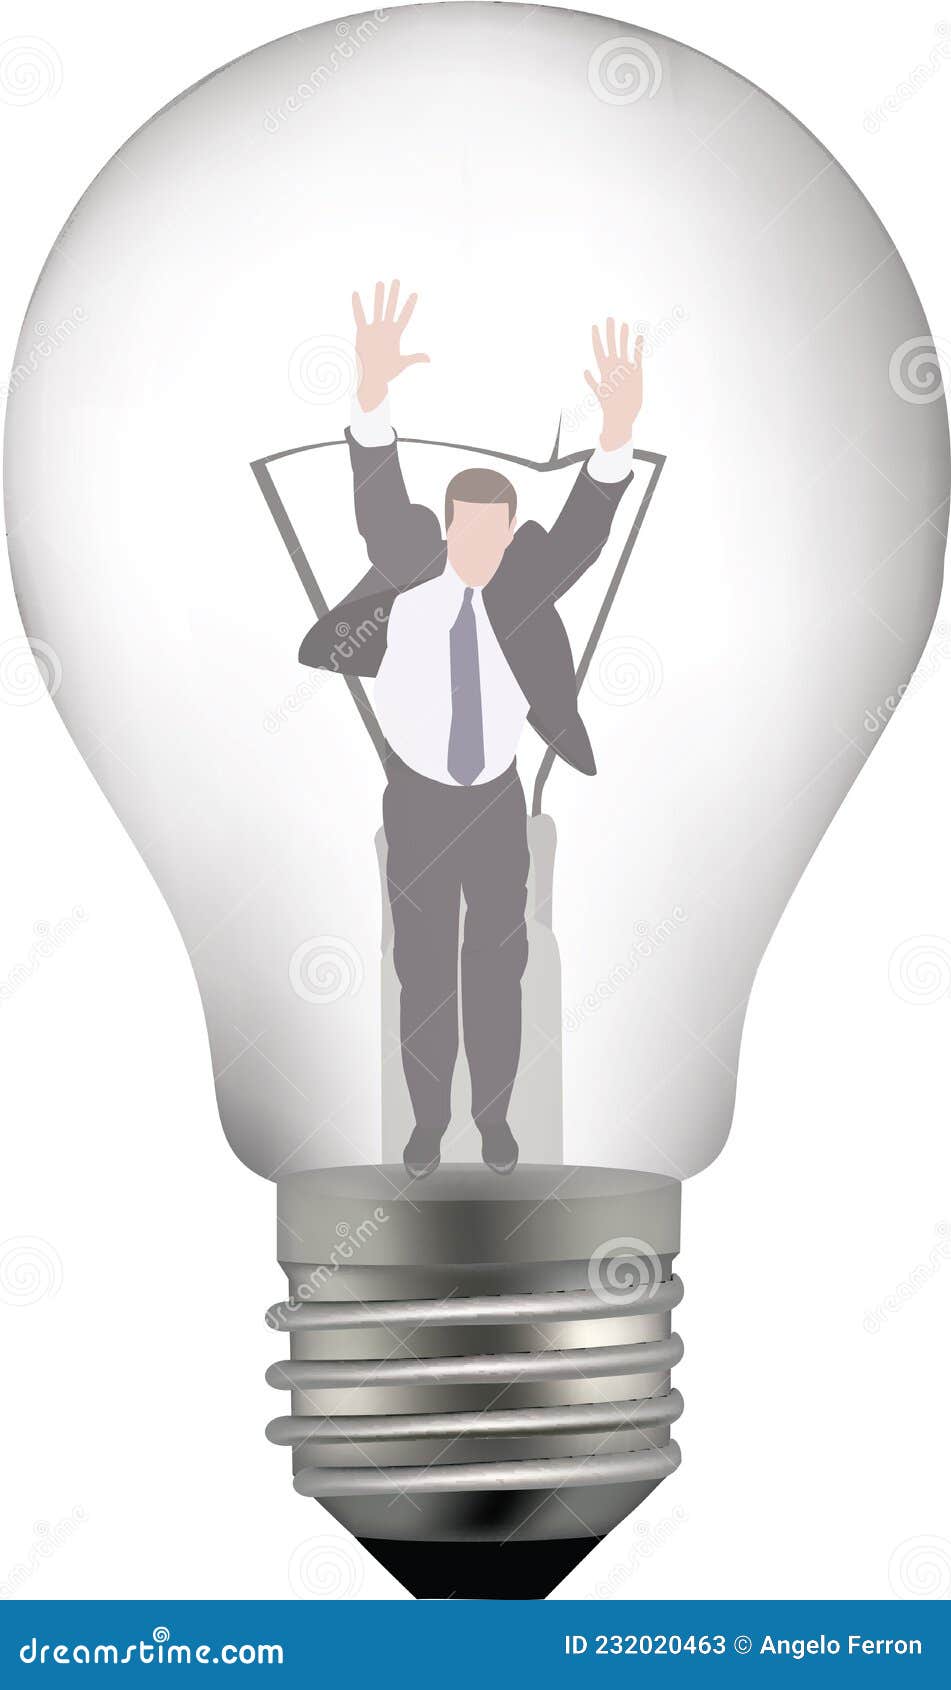 person locked inside a light bulb